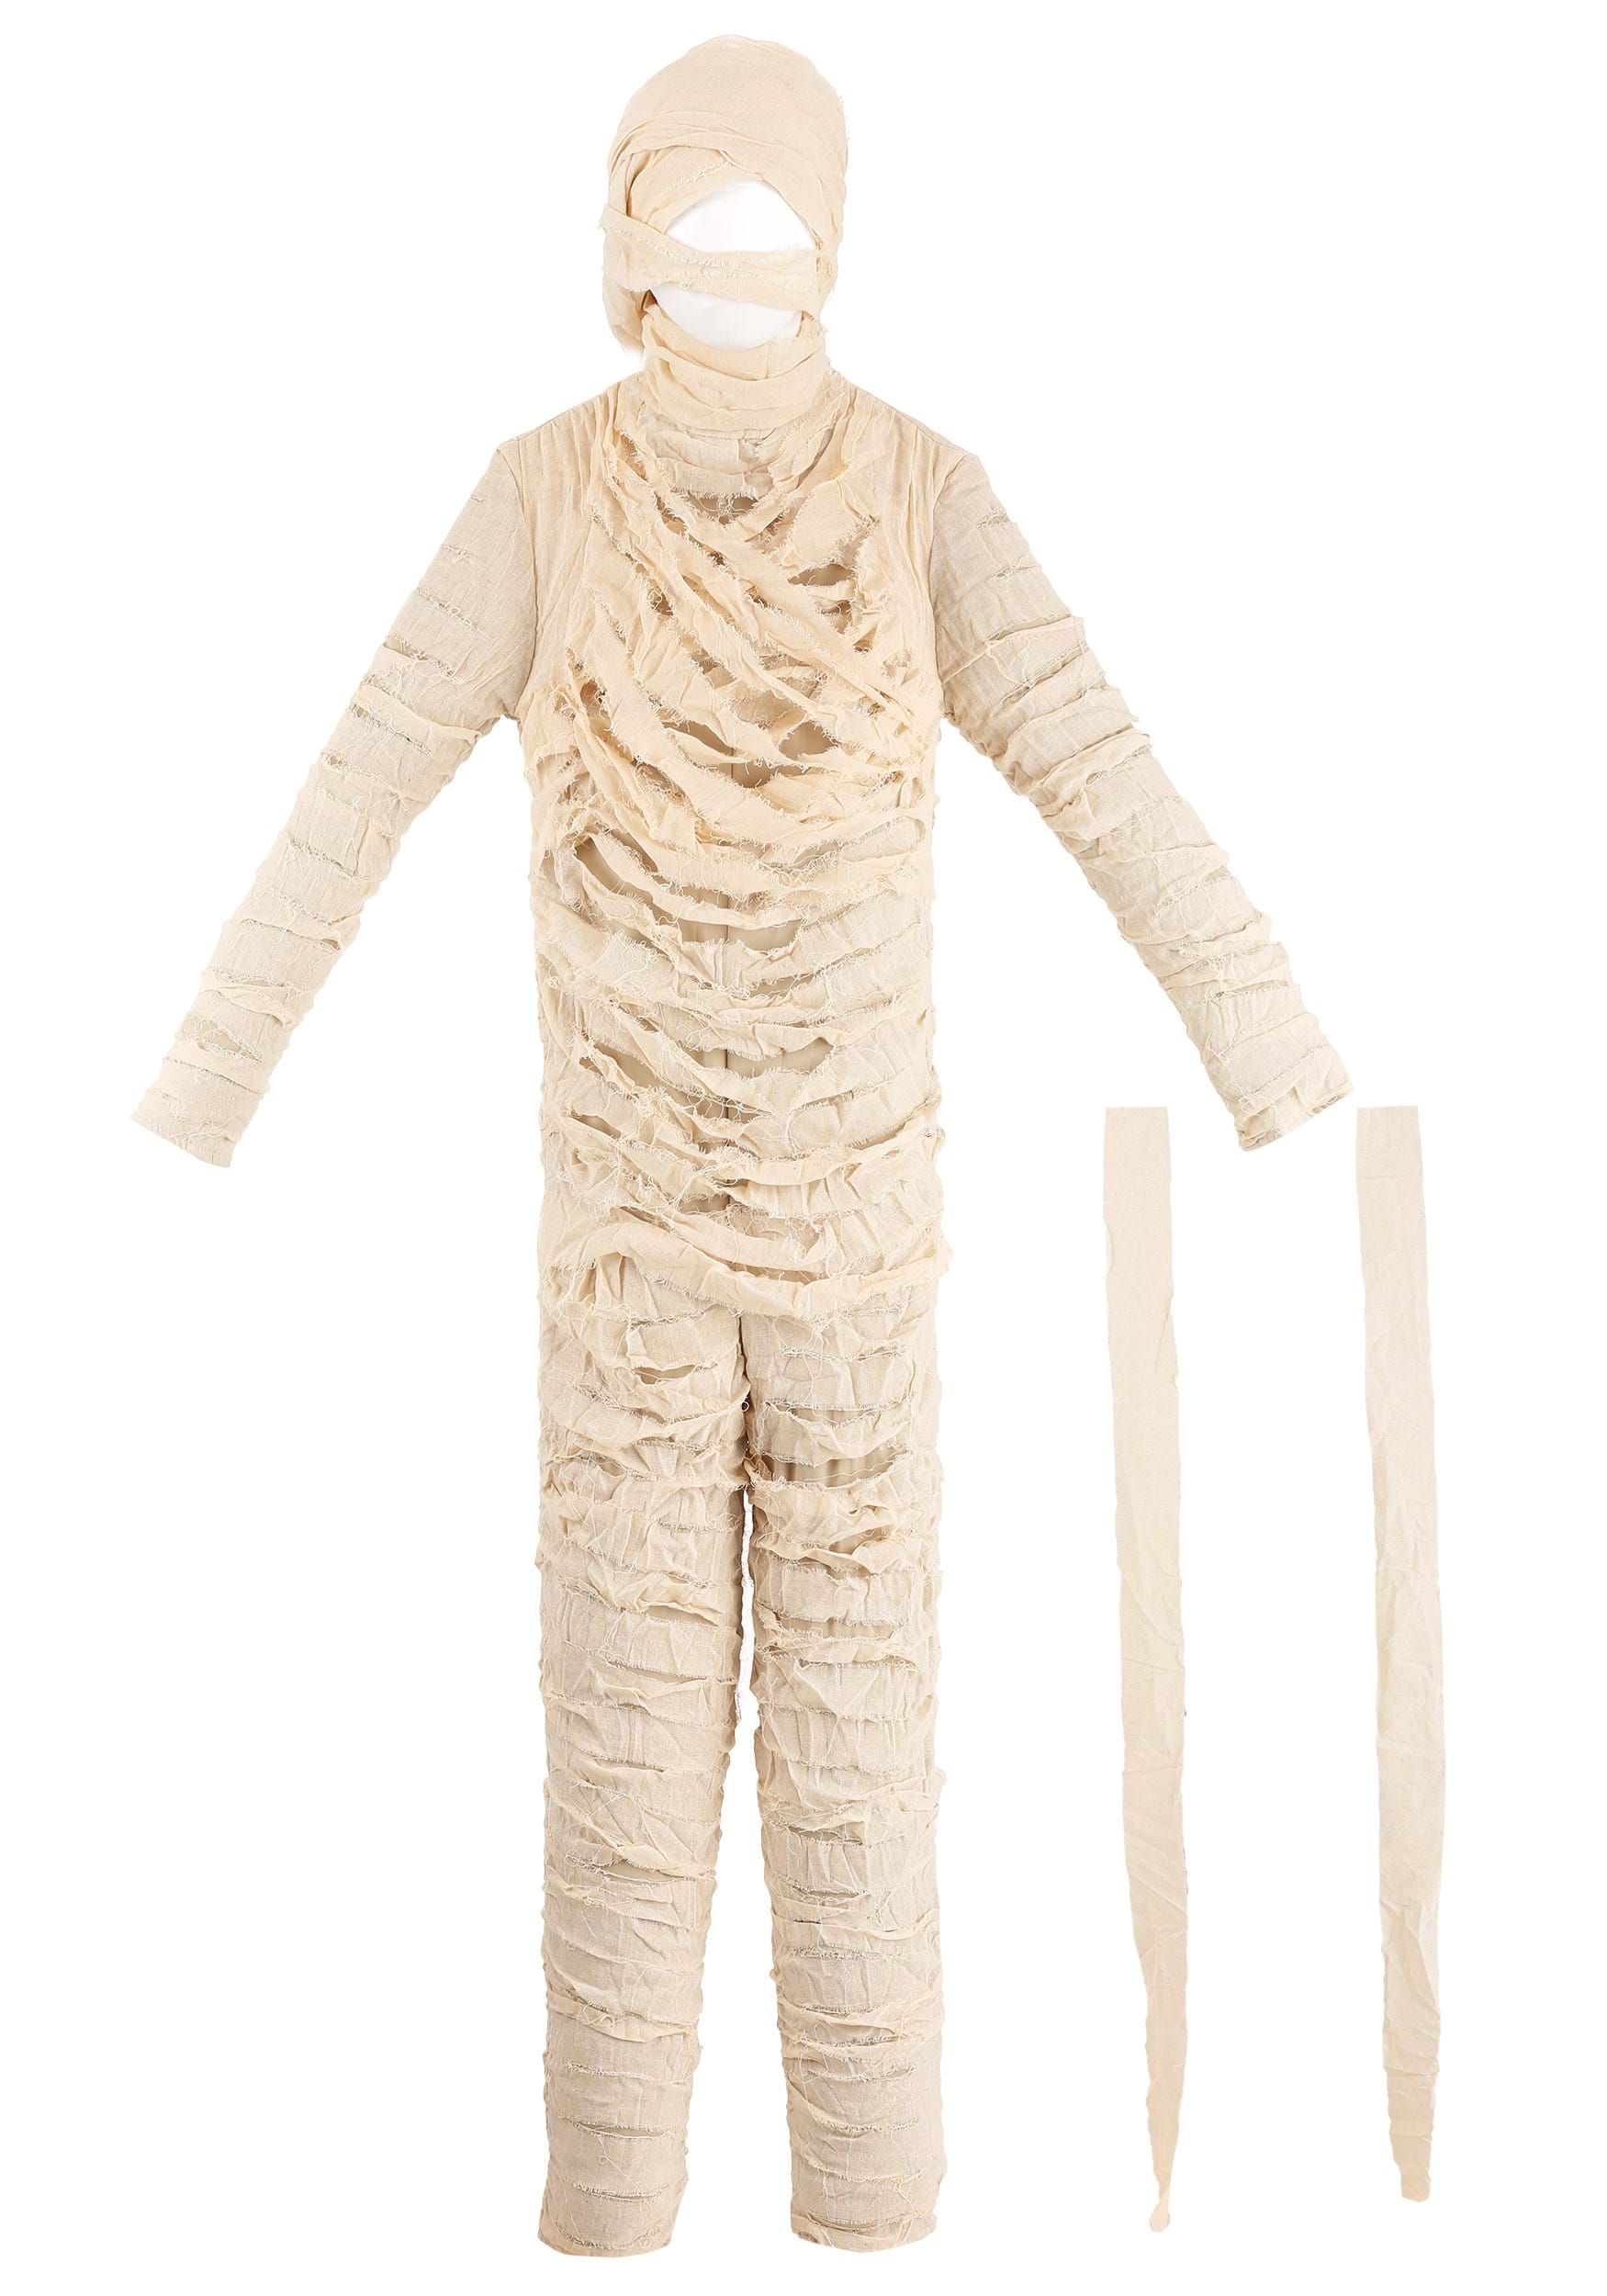 Mummy Costume For Men